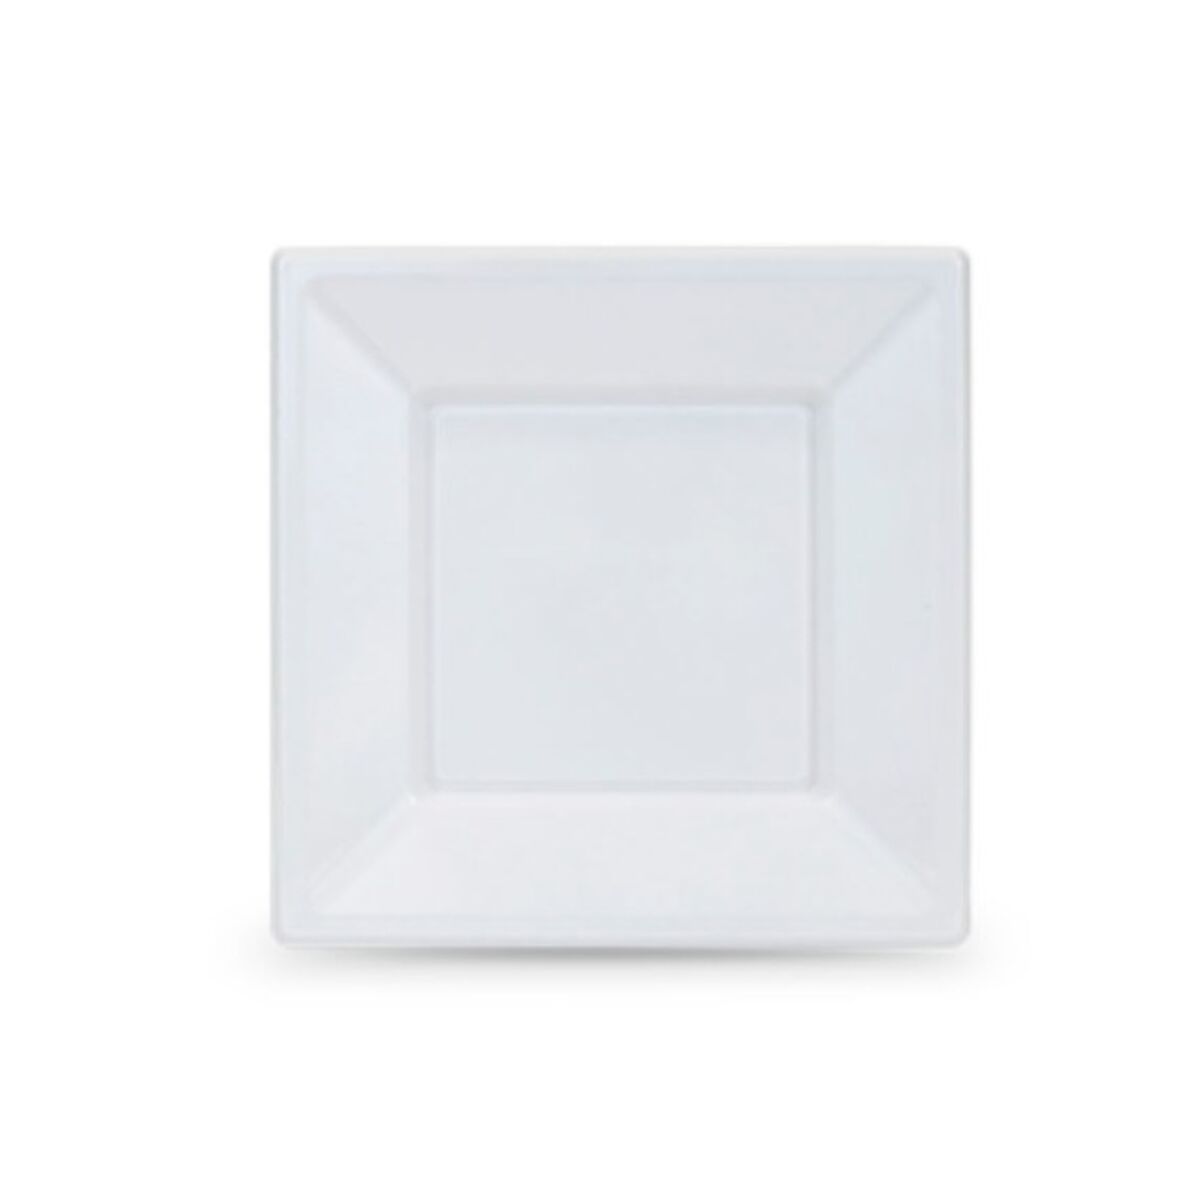 Mehrweg-Teller-Set Algon Weiß Kunststoff 18 cm (6 Stück)